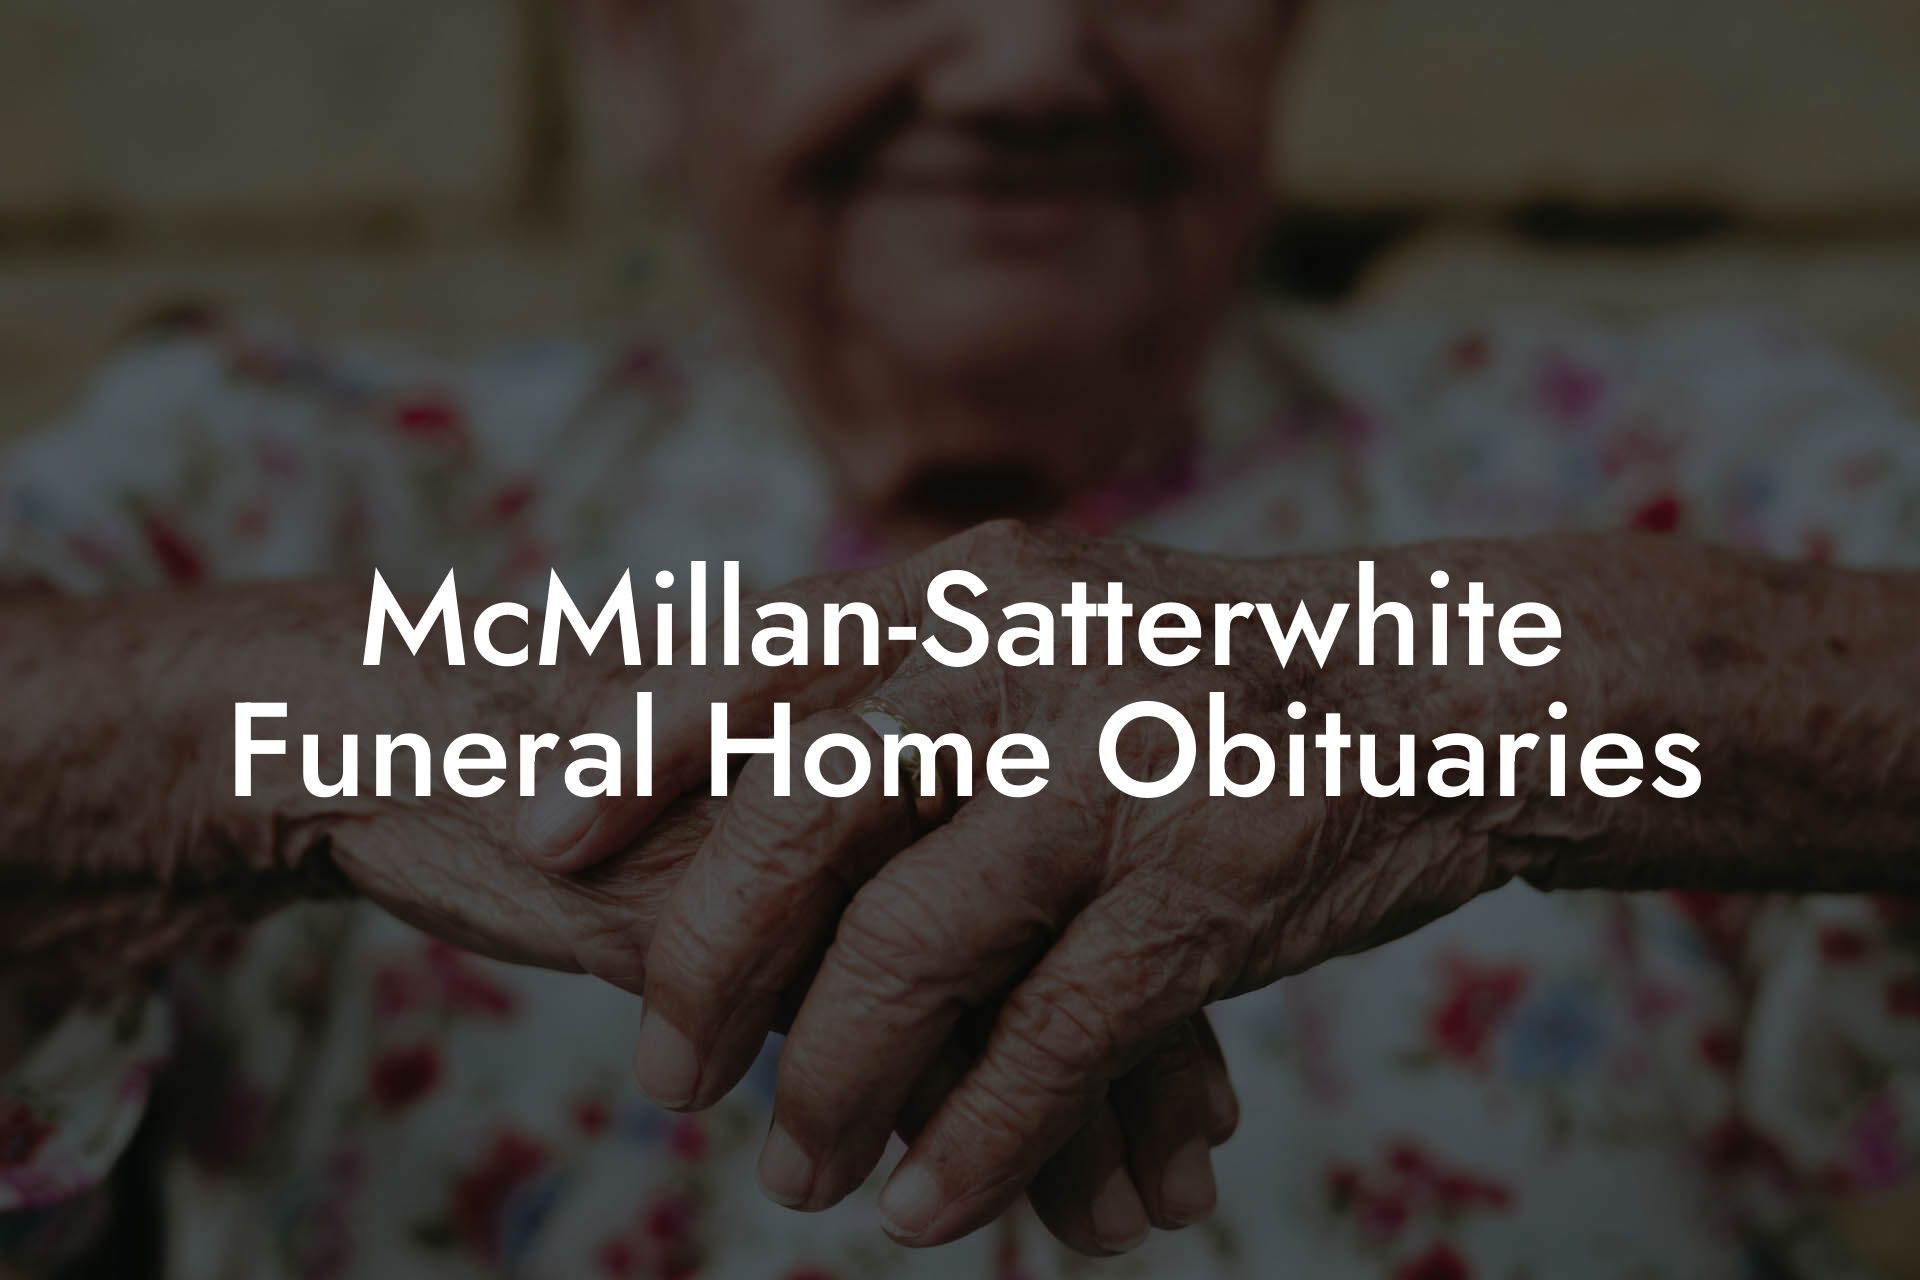 McMillan-Satterwhite Funeral Home Obituaries